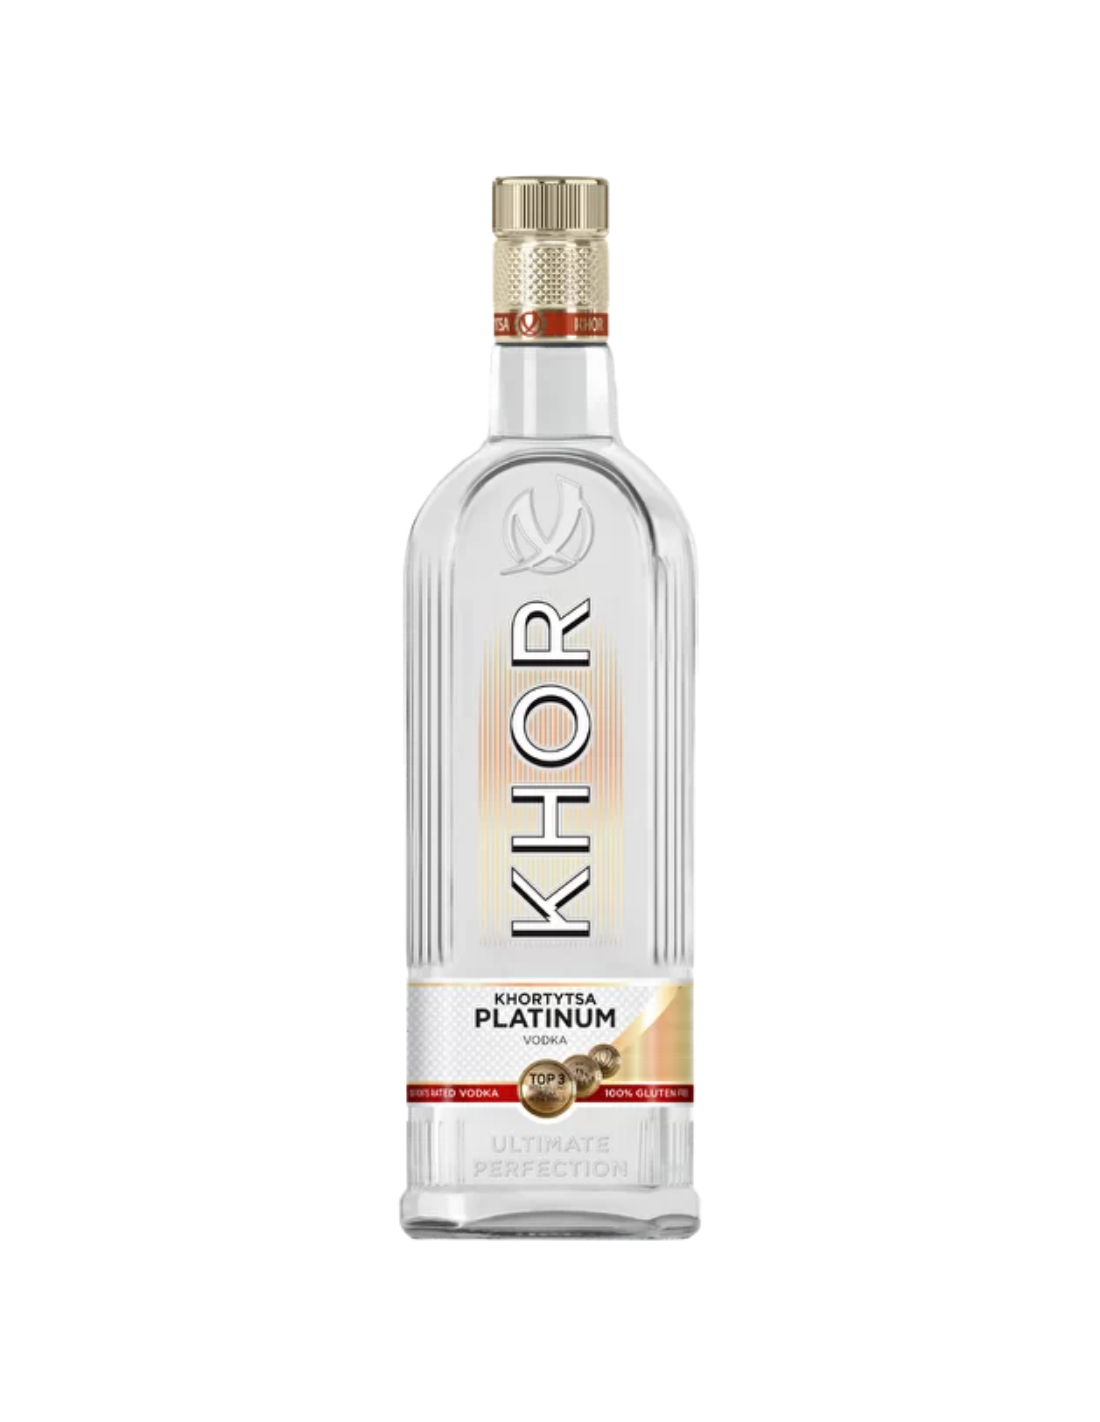 Vodca Khortytsa Khor Platinum 40% alc., 0.7L alcooldiscount.ro